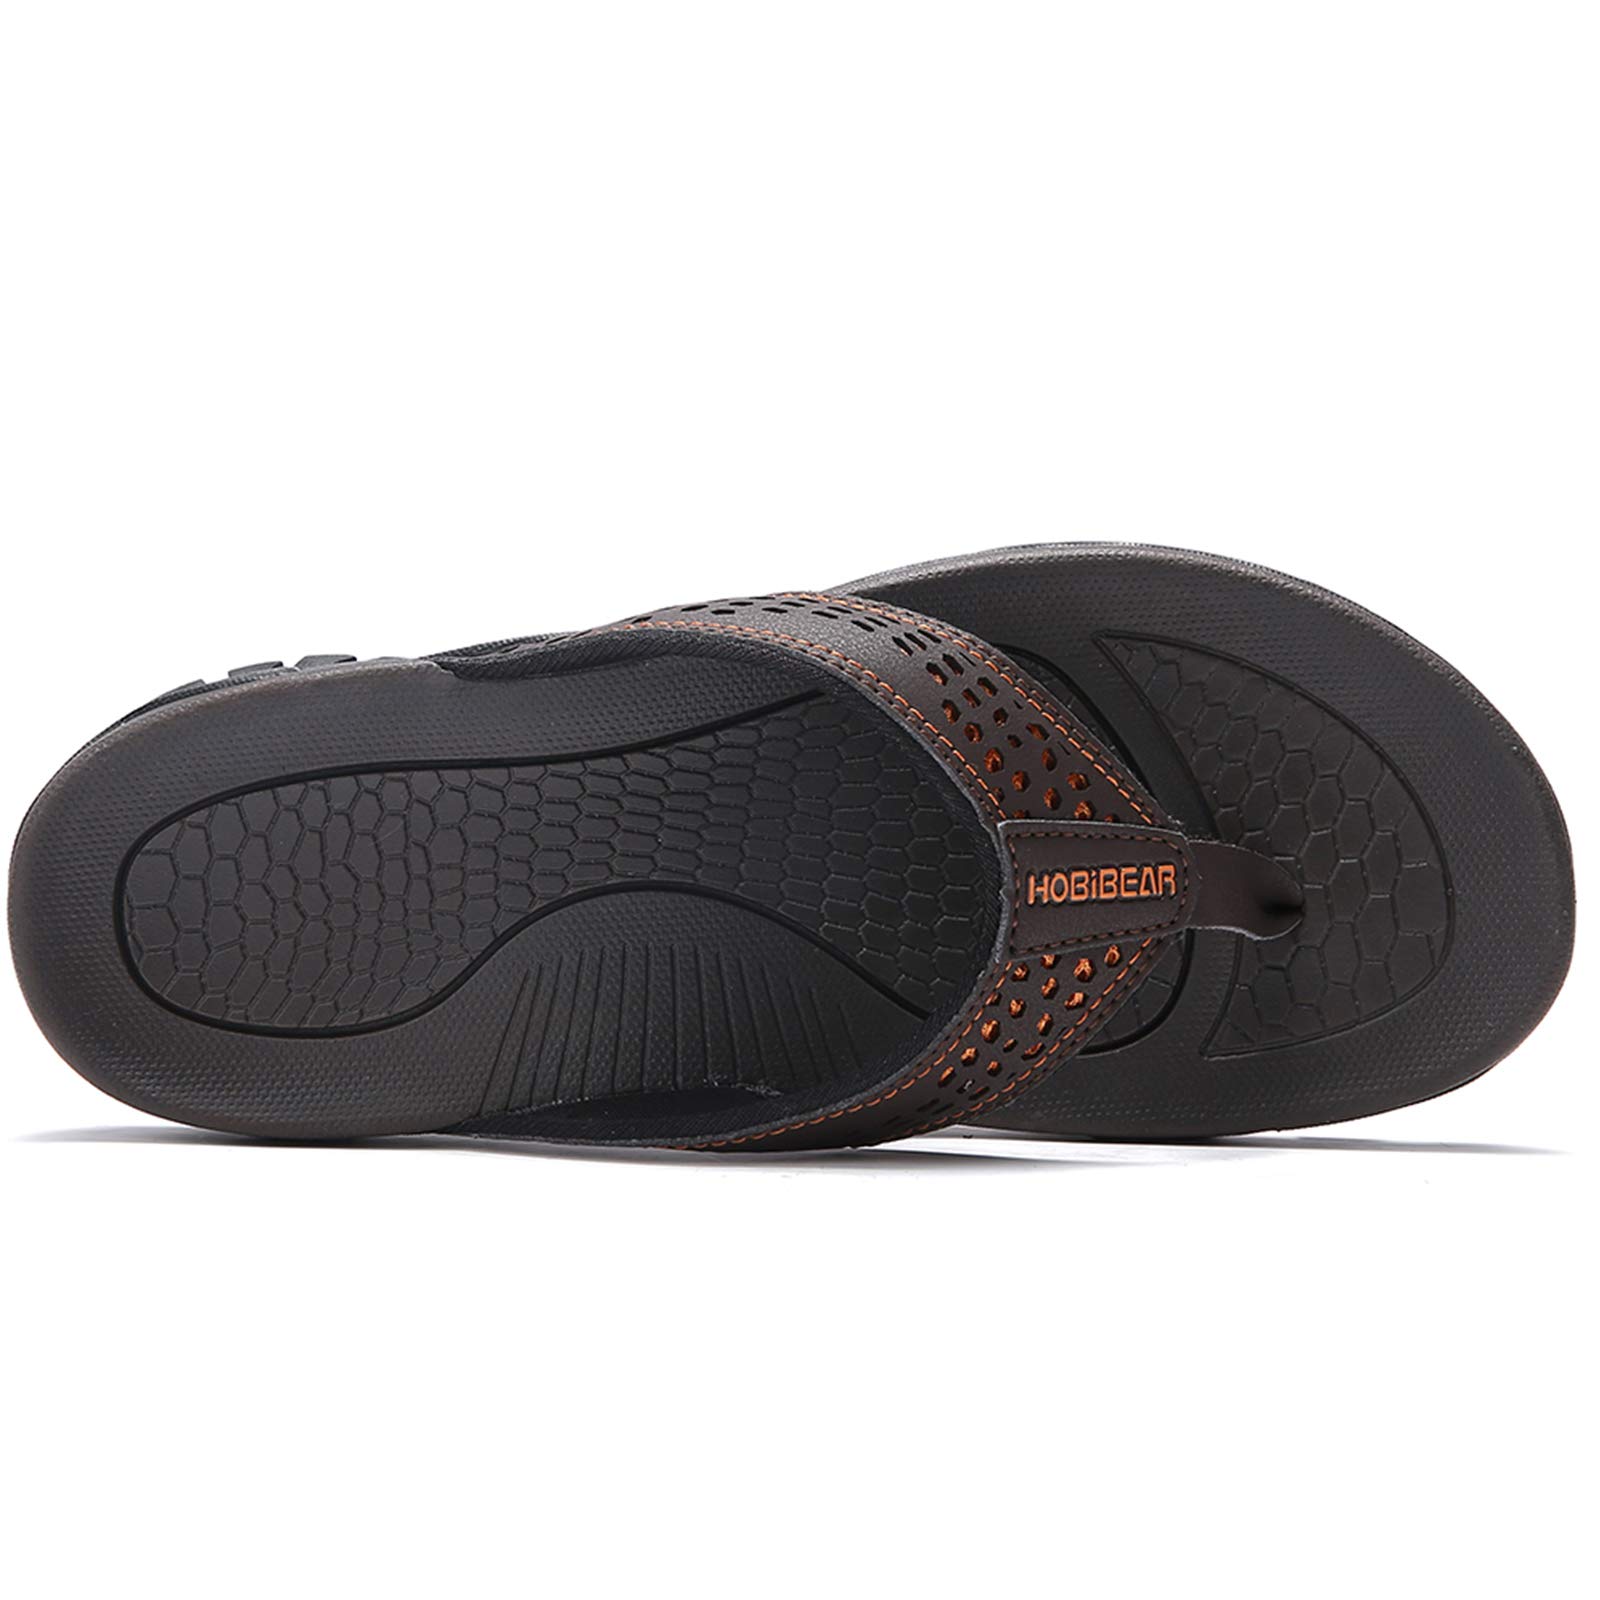 GUBARUN Mens Sport Flip Flops Comfort Casual Thong Sandals Outdoor(Brown 1, 11)